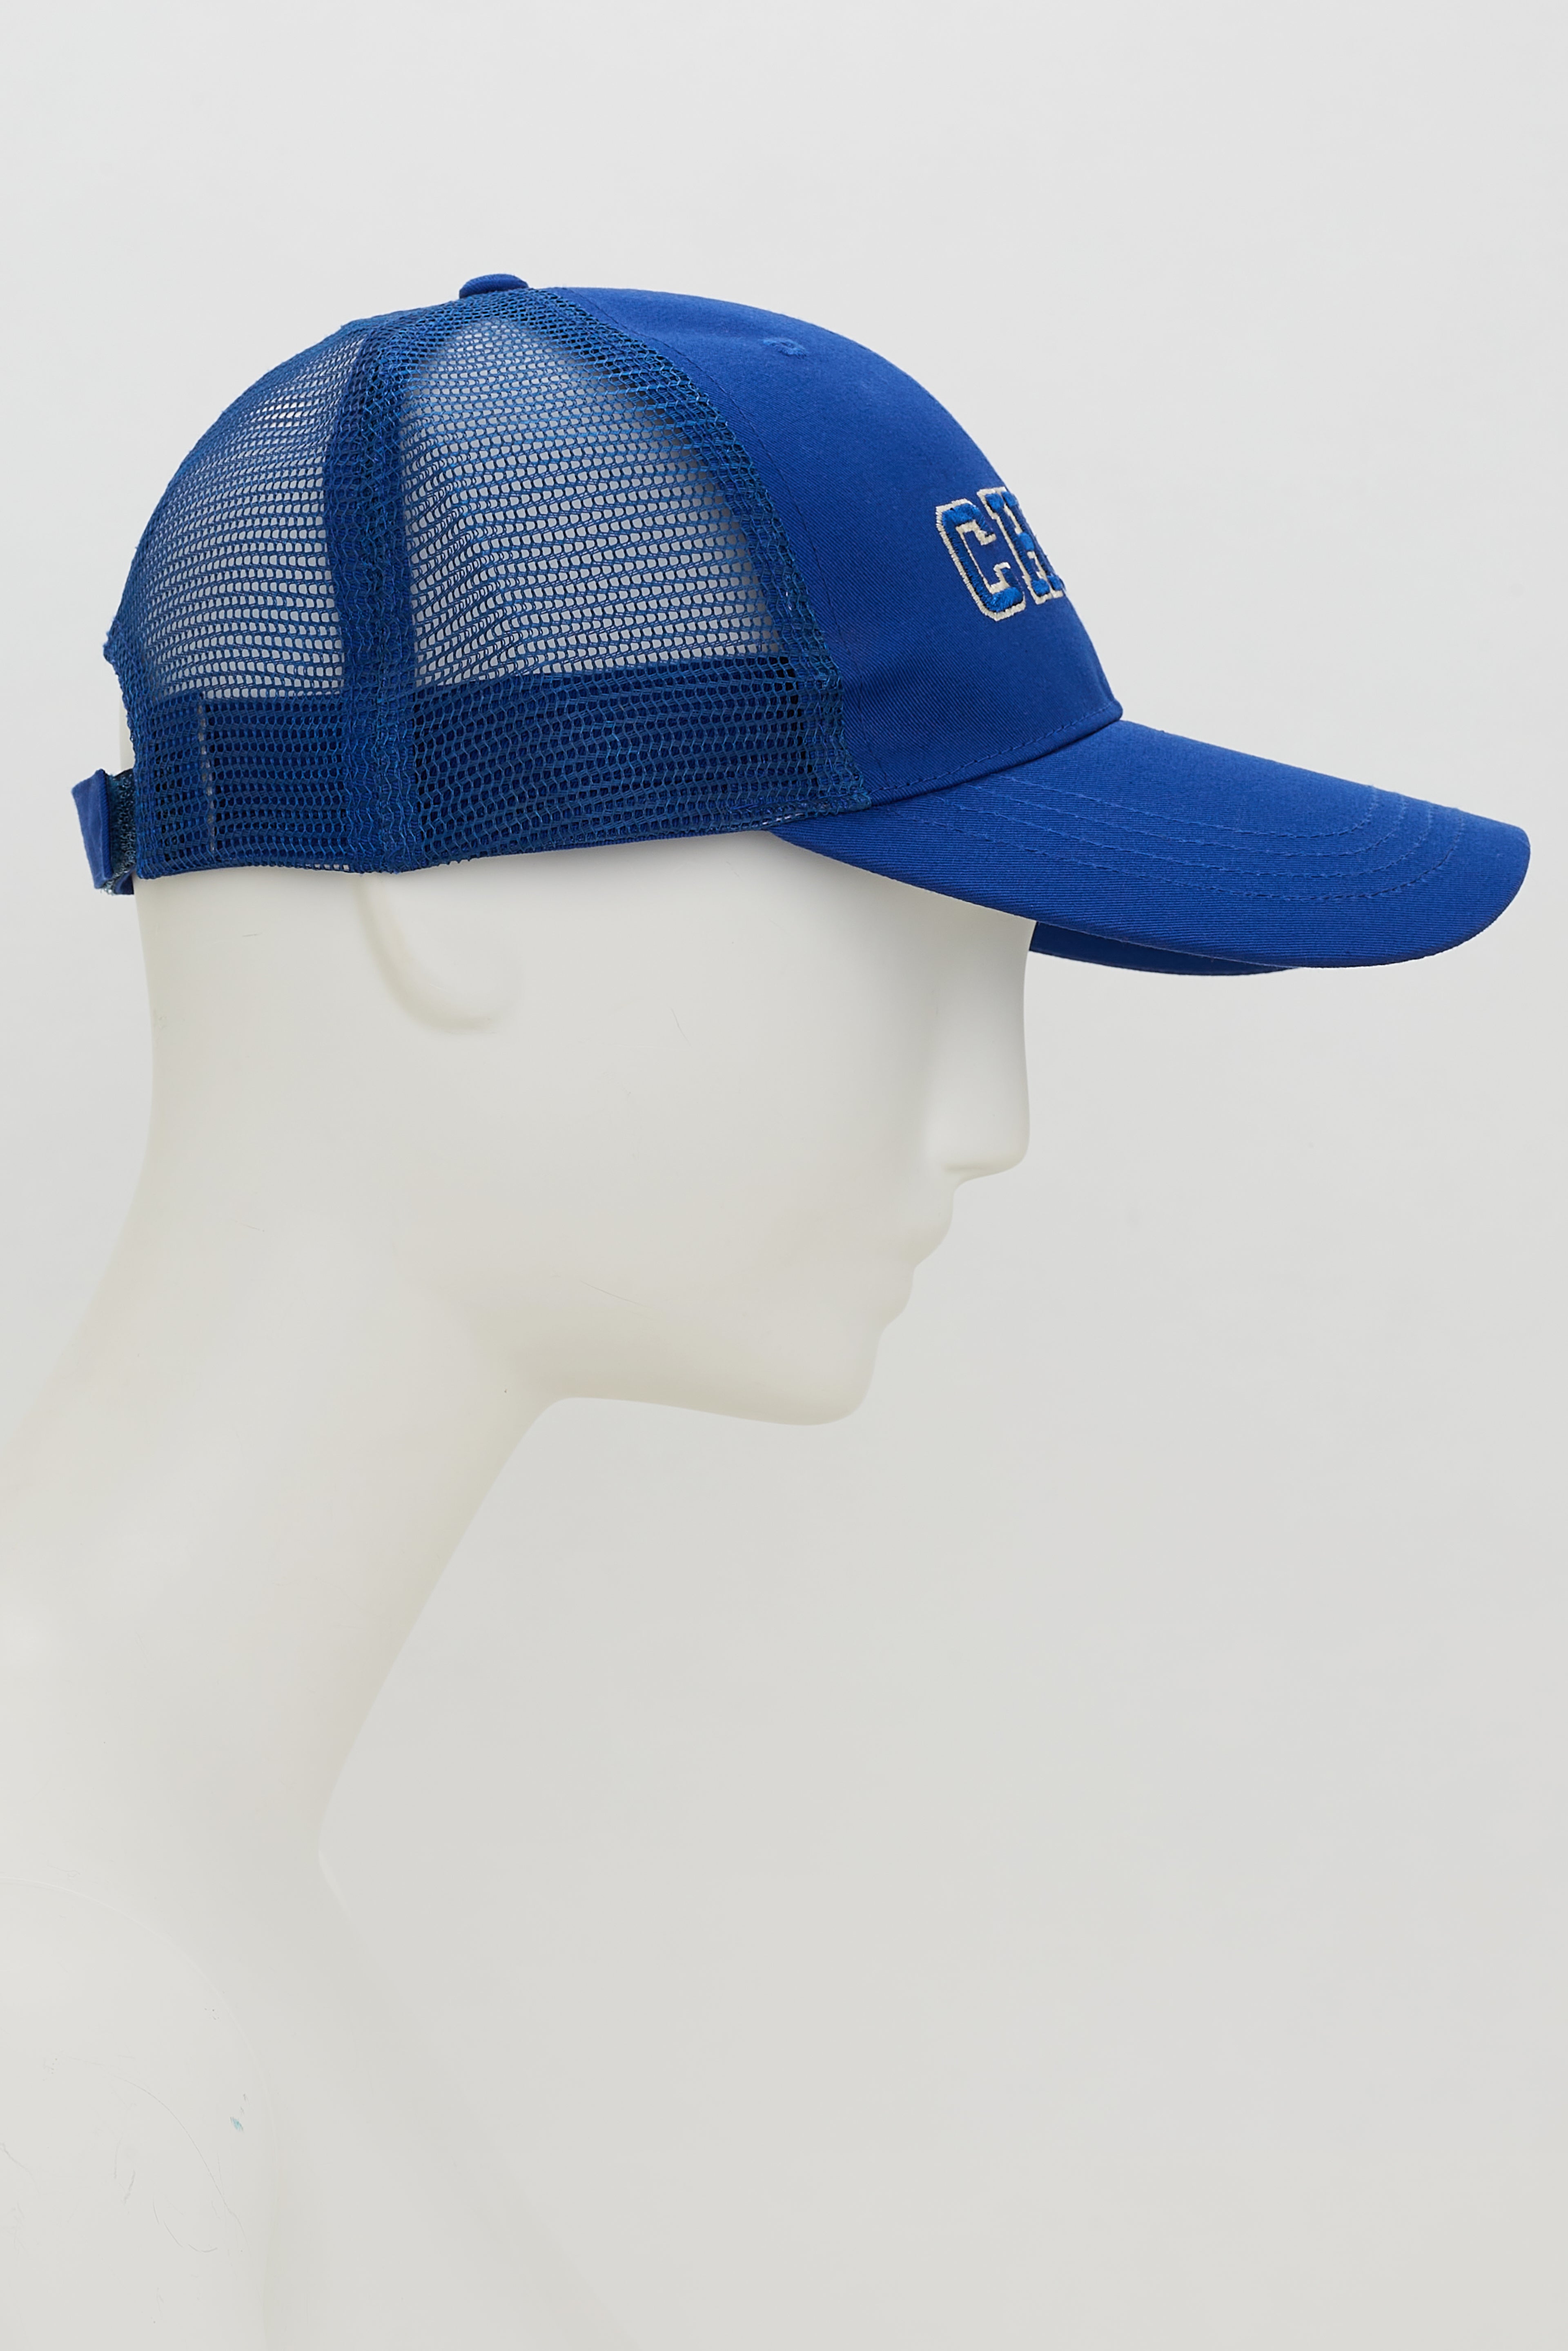 Dorothee-Schumacher-OUTLET-SALE-CHIYC-baseball-cap-Accessoires-OS-royal-blue-4.jpg